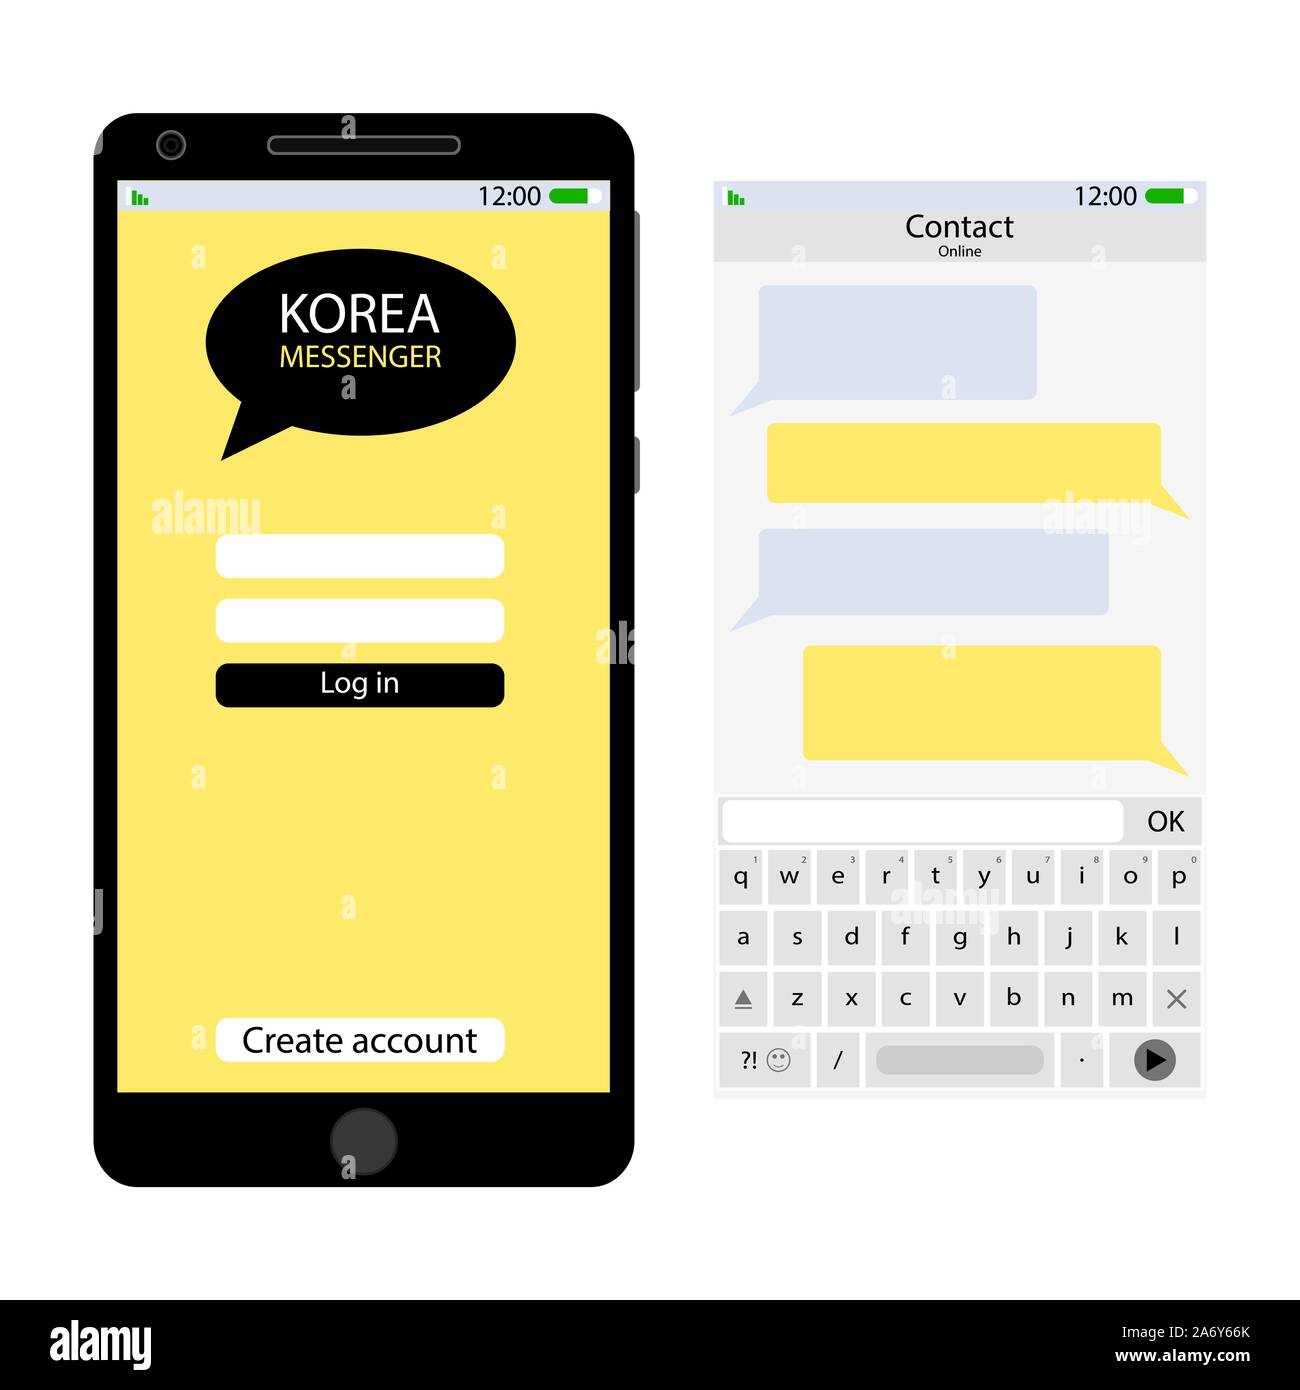 Korea messenger User Interface. Korea messenger Kommunikation app, Dialog und Chat Bildschirm kommunizieren, Vector Illustration, asiatische chatten Kakao sprechen Stock Vektor